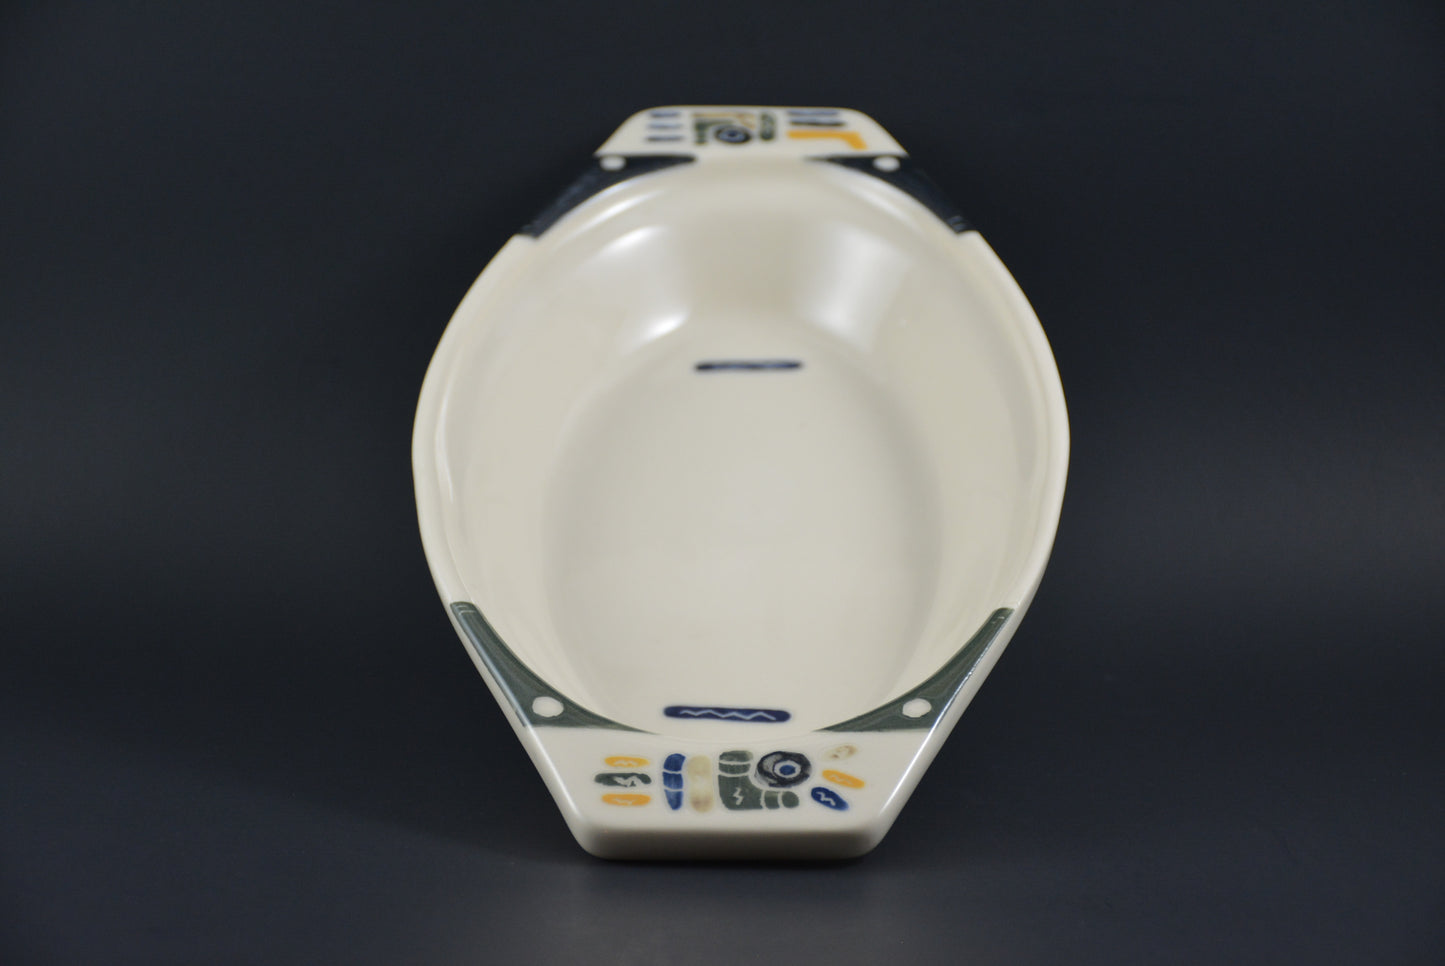 ASC-03 Ceramic Oval hollow plate - Oval porcelain plate